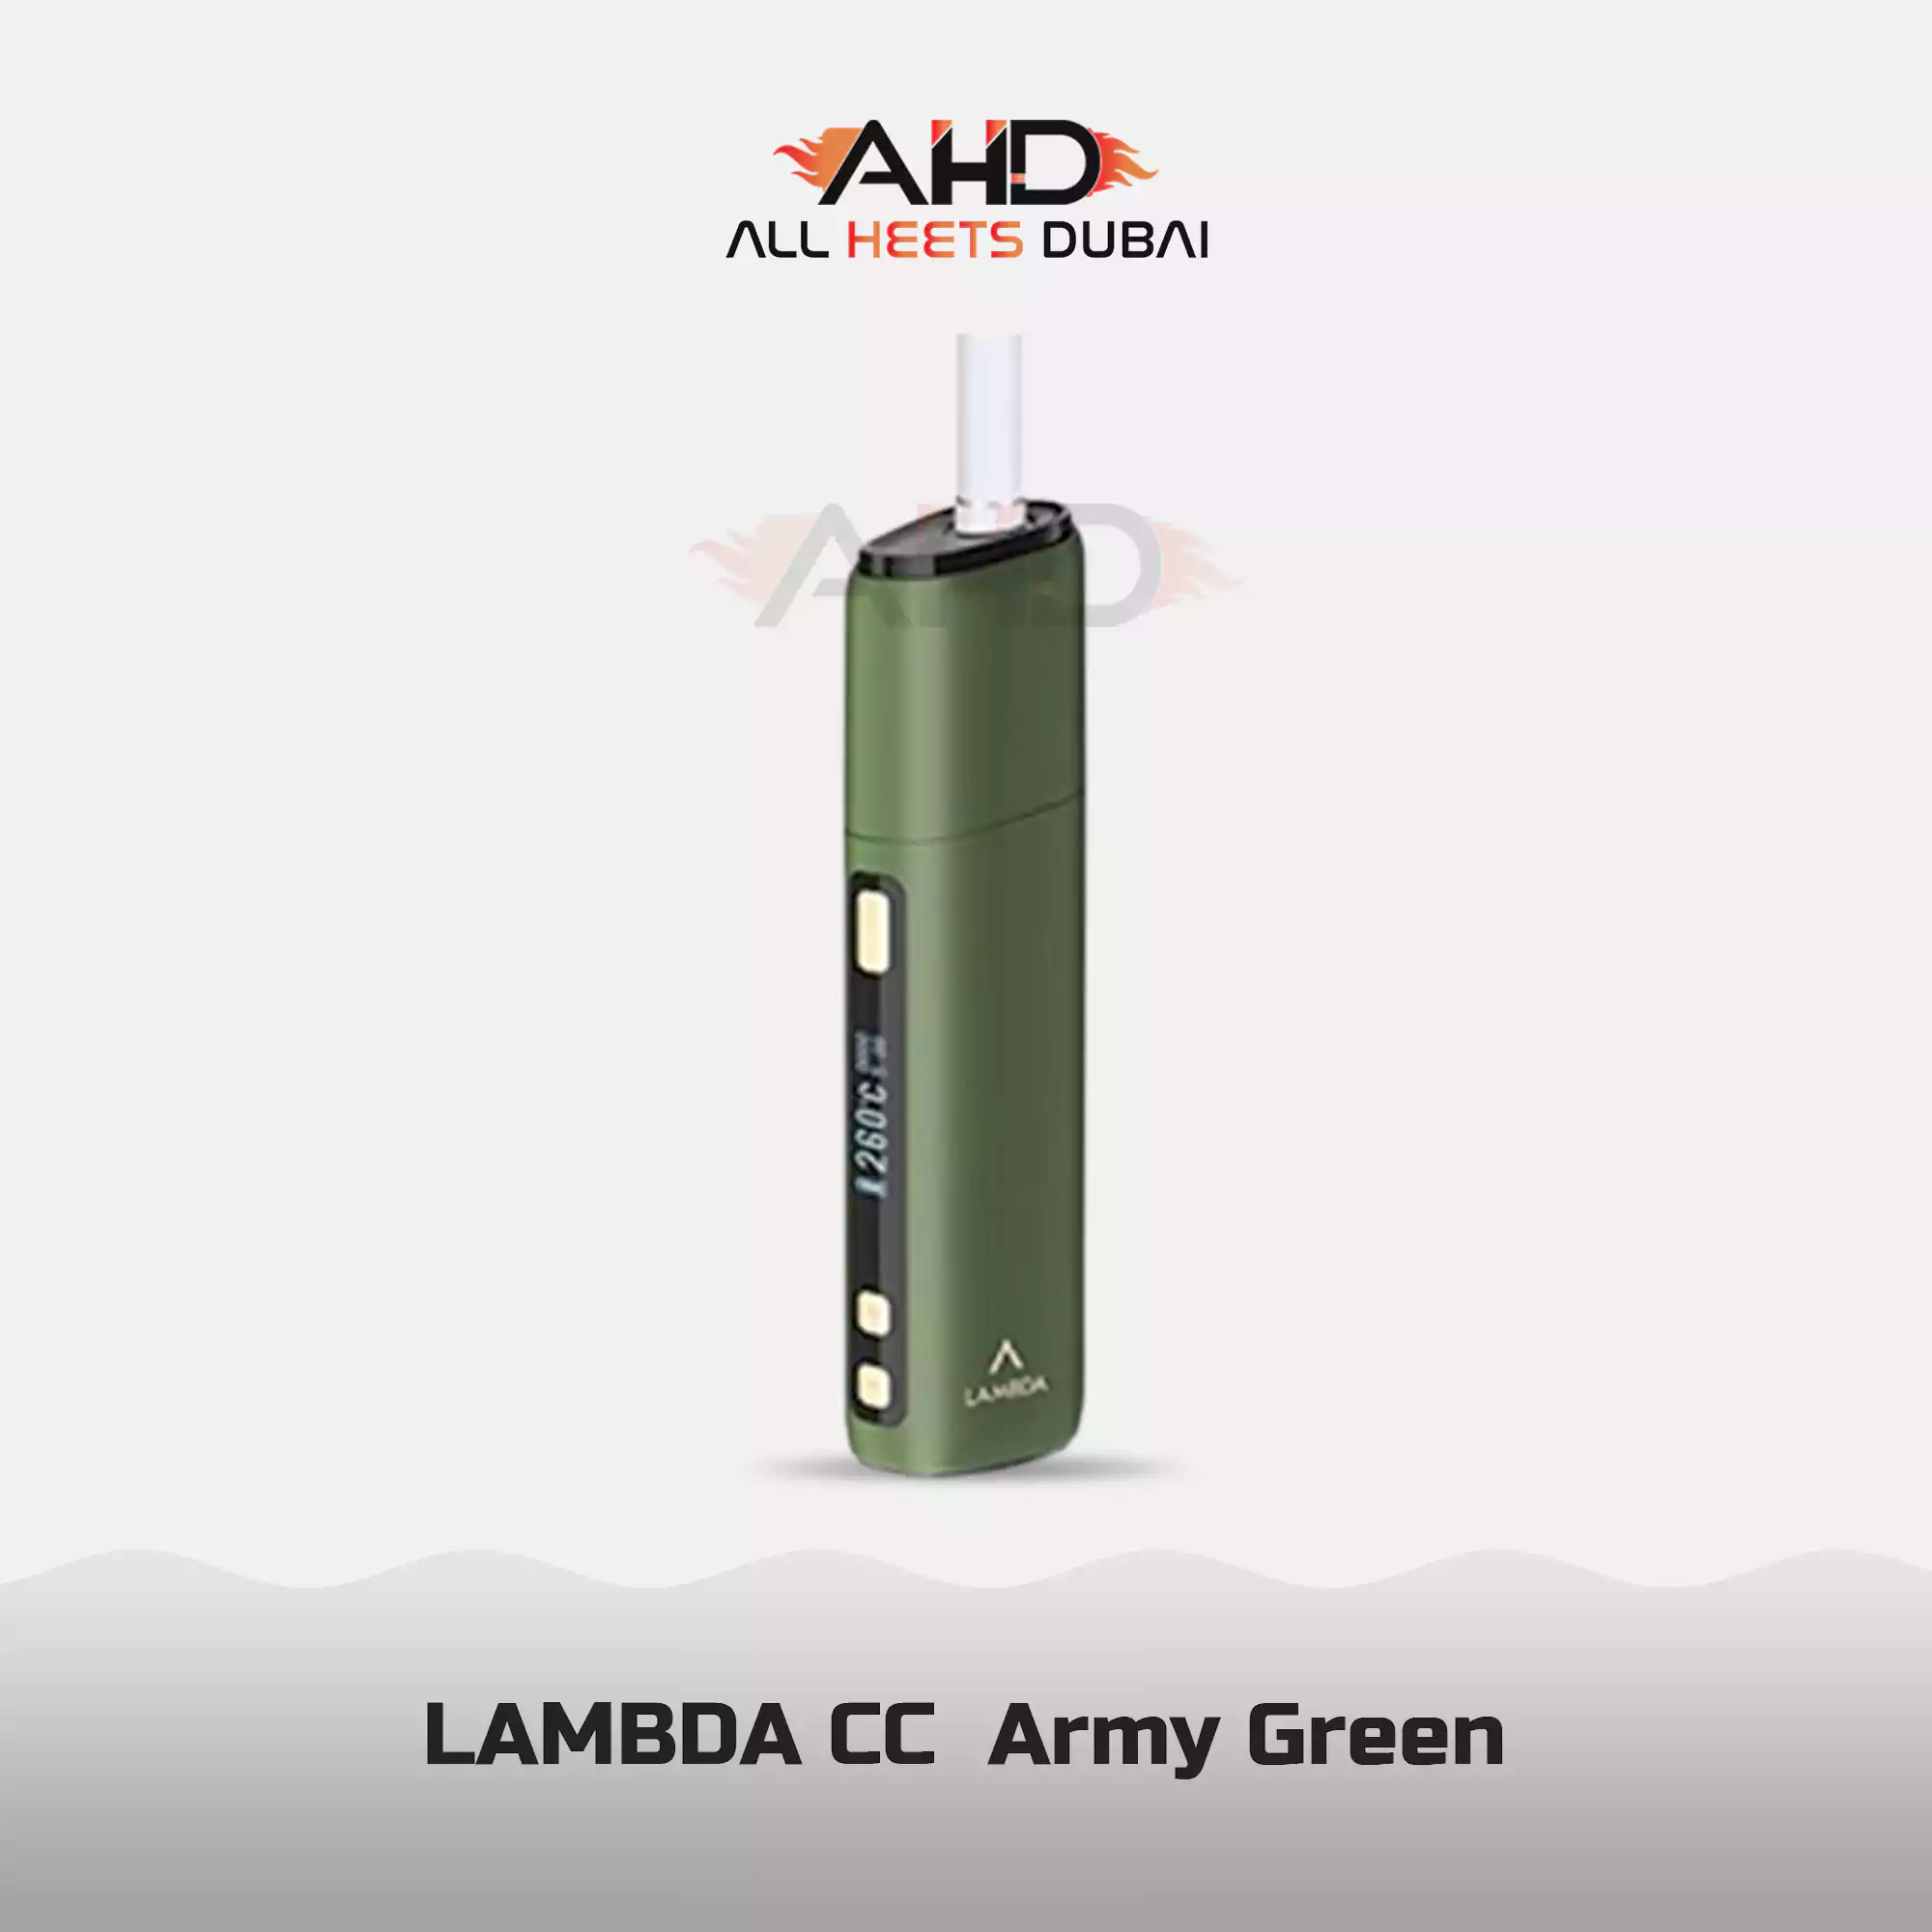 LAMBDA CC Army Green Dubai